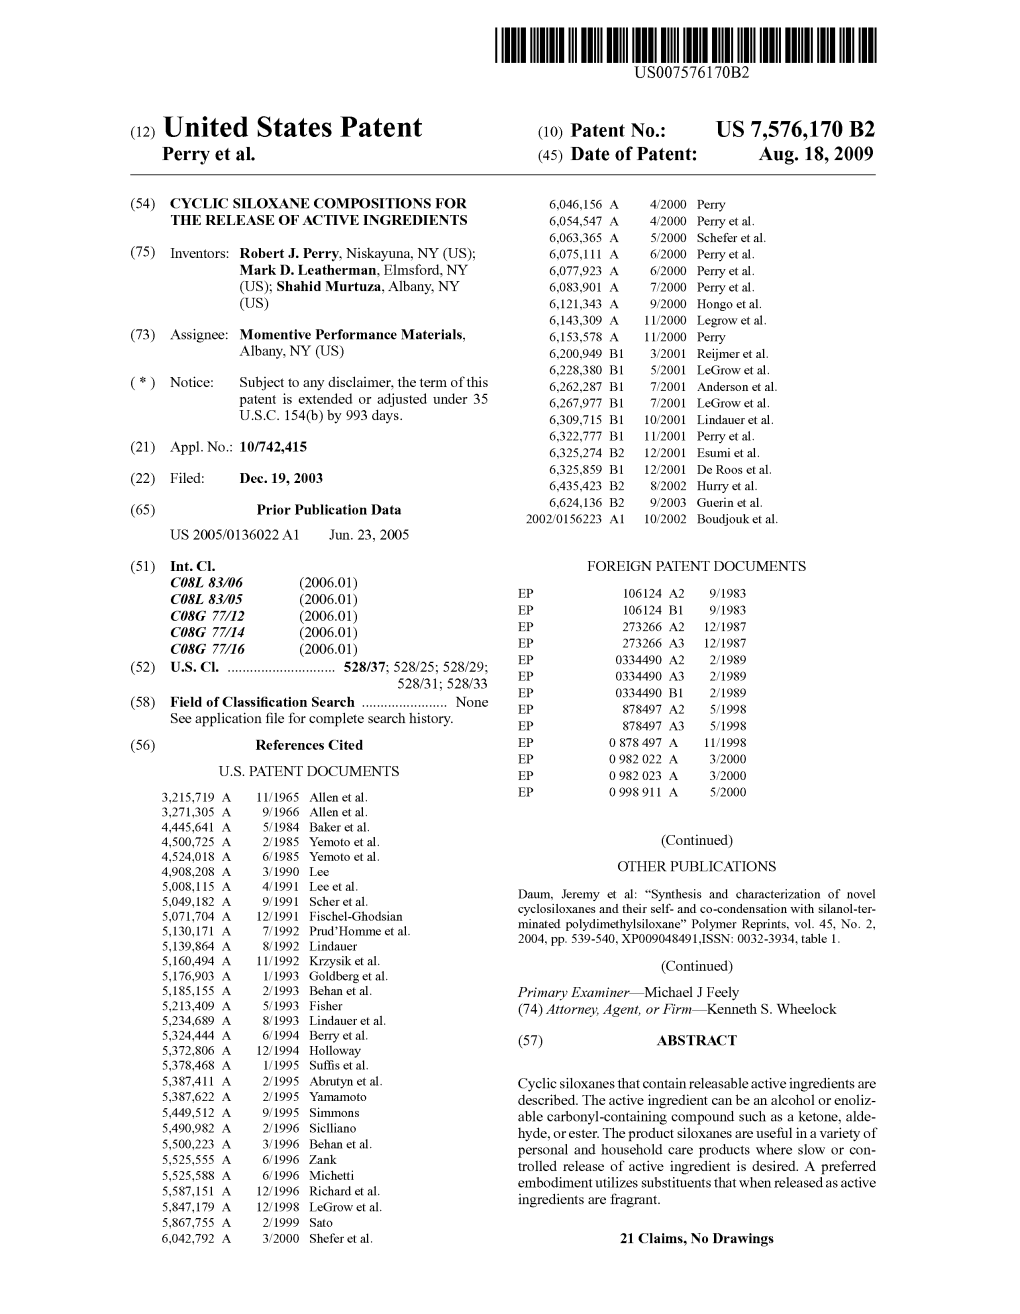 (12) United States Patent (10) Patent No.: US 7,576,170 B2 Perry Et Al